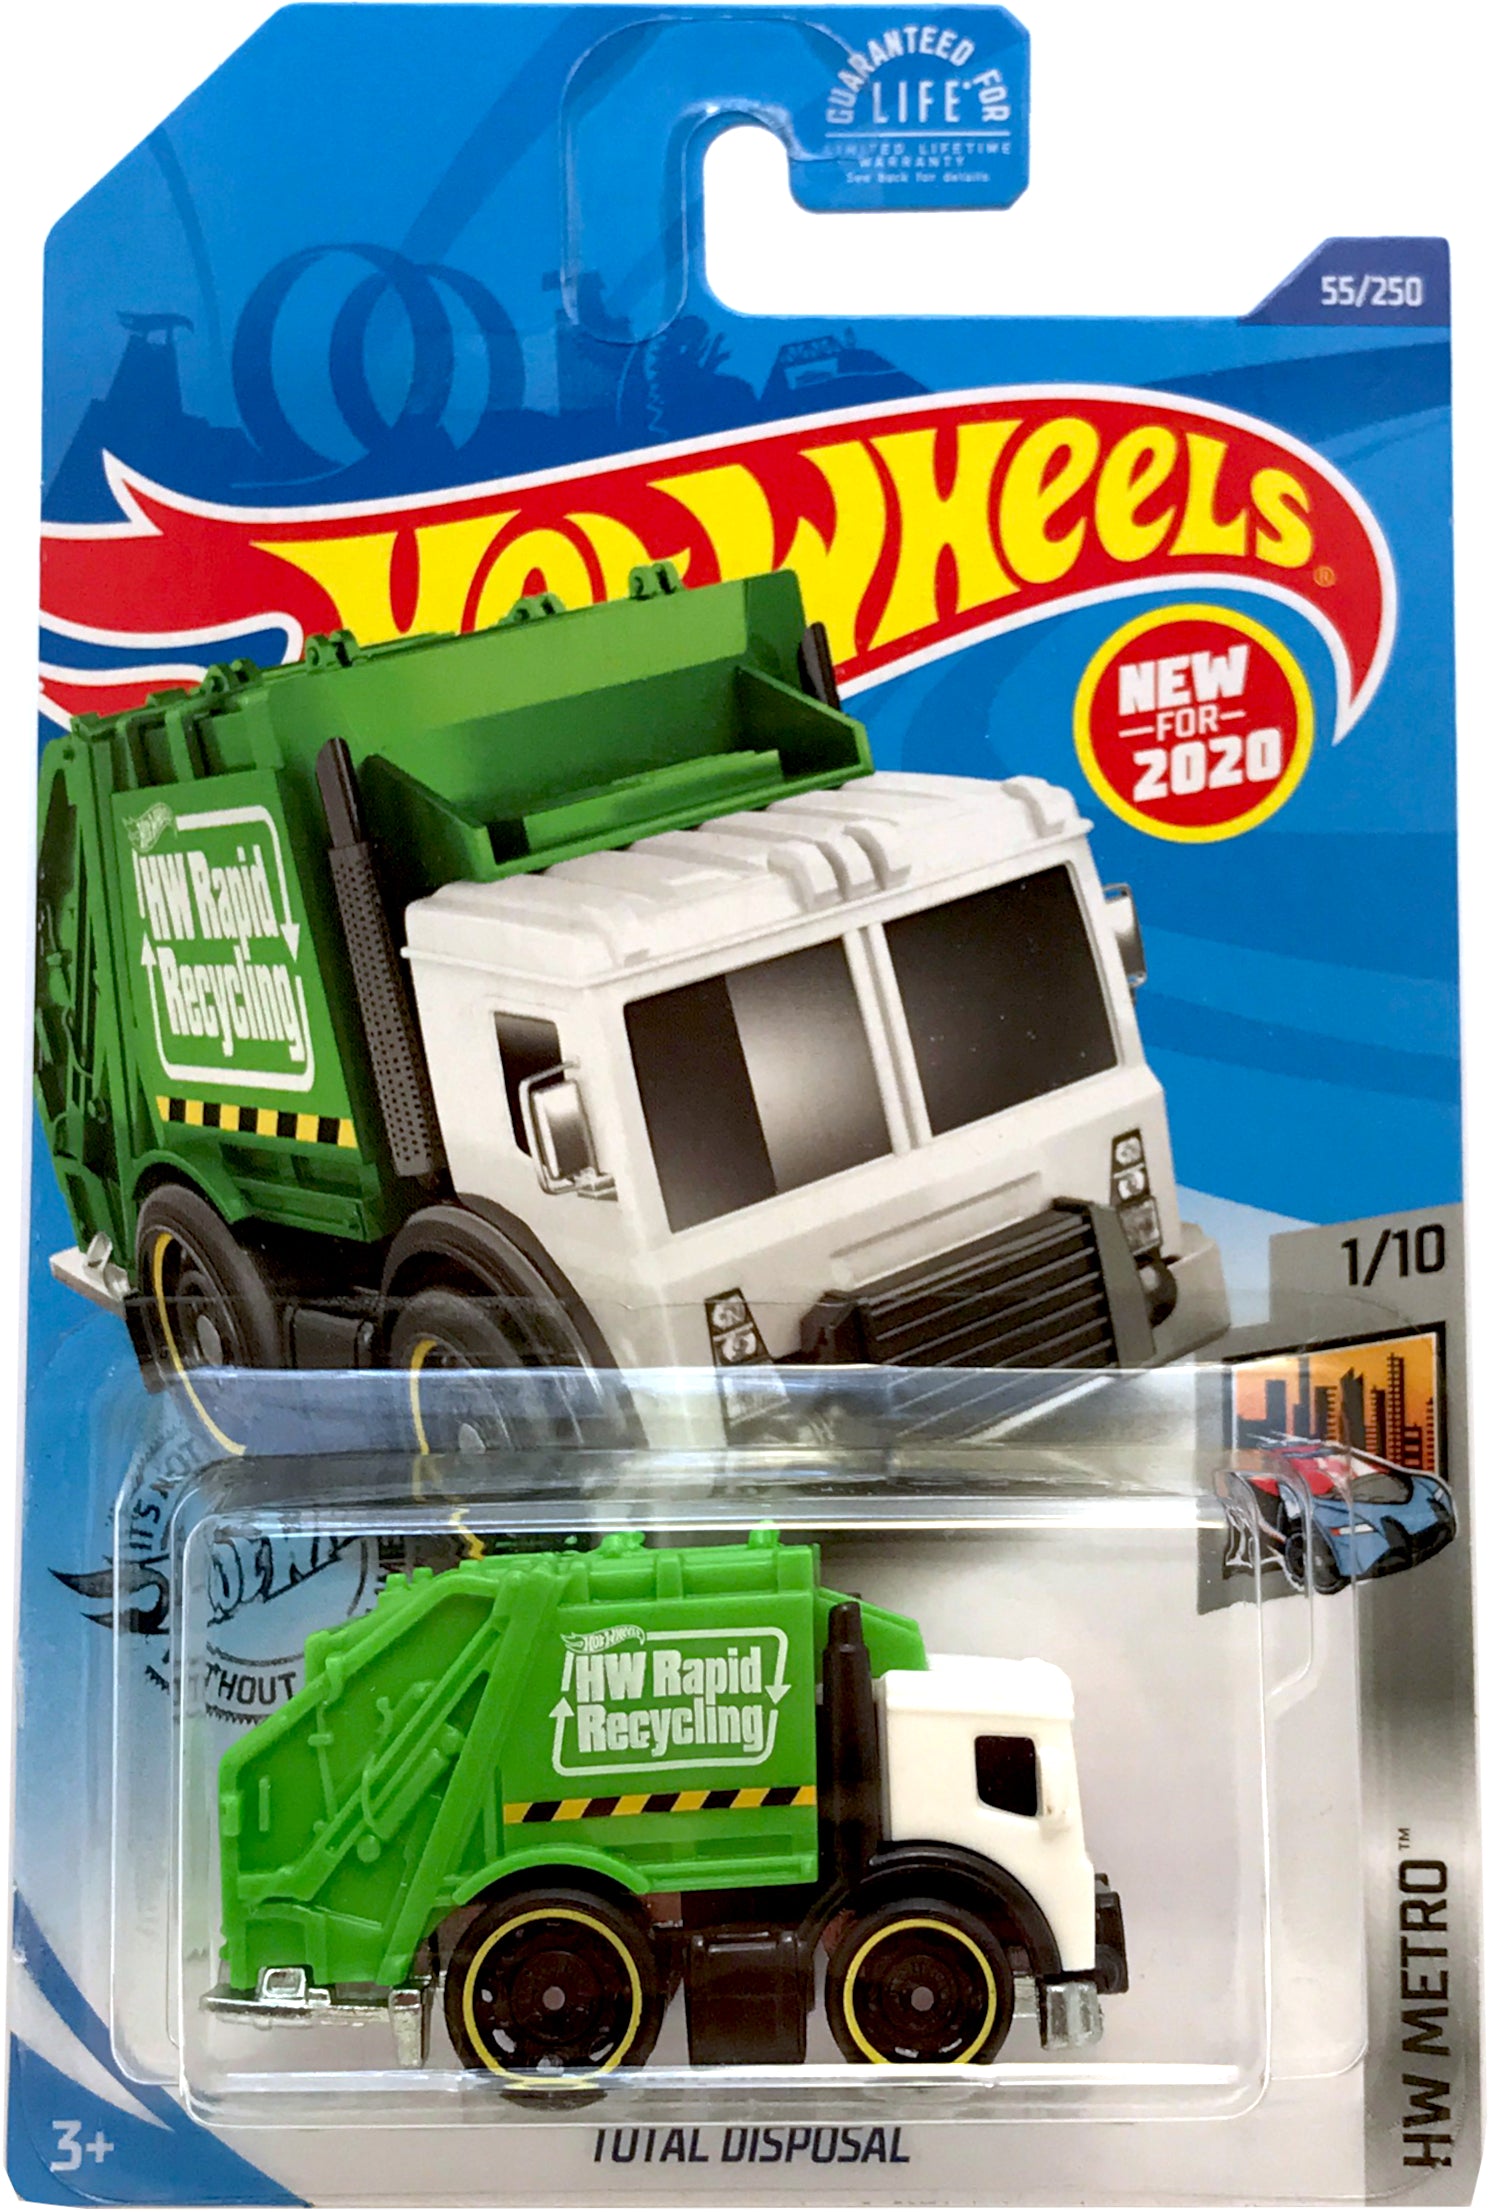 2020 Hot Wheels Mainline #055 - Total Disposal Garbage Truck (Green) GHD90